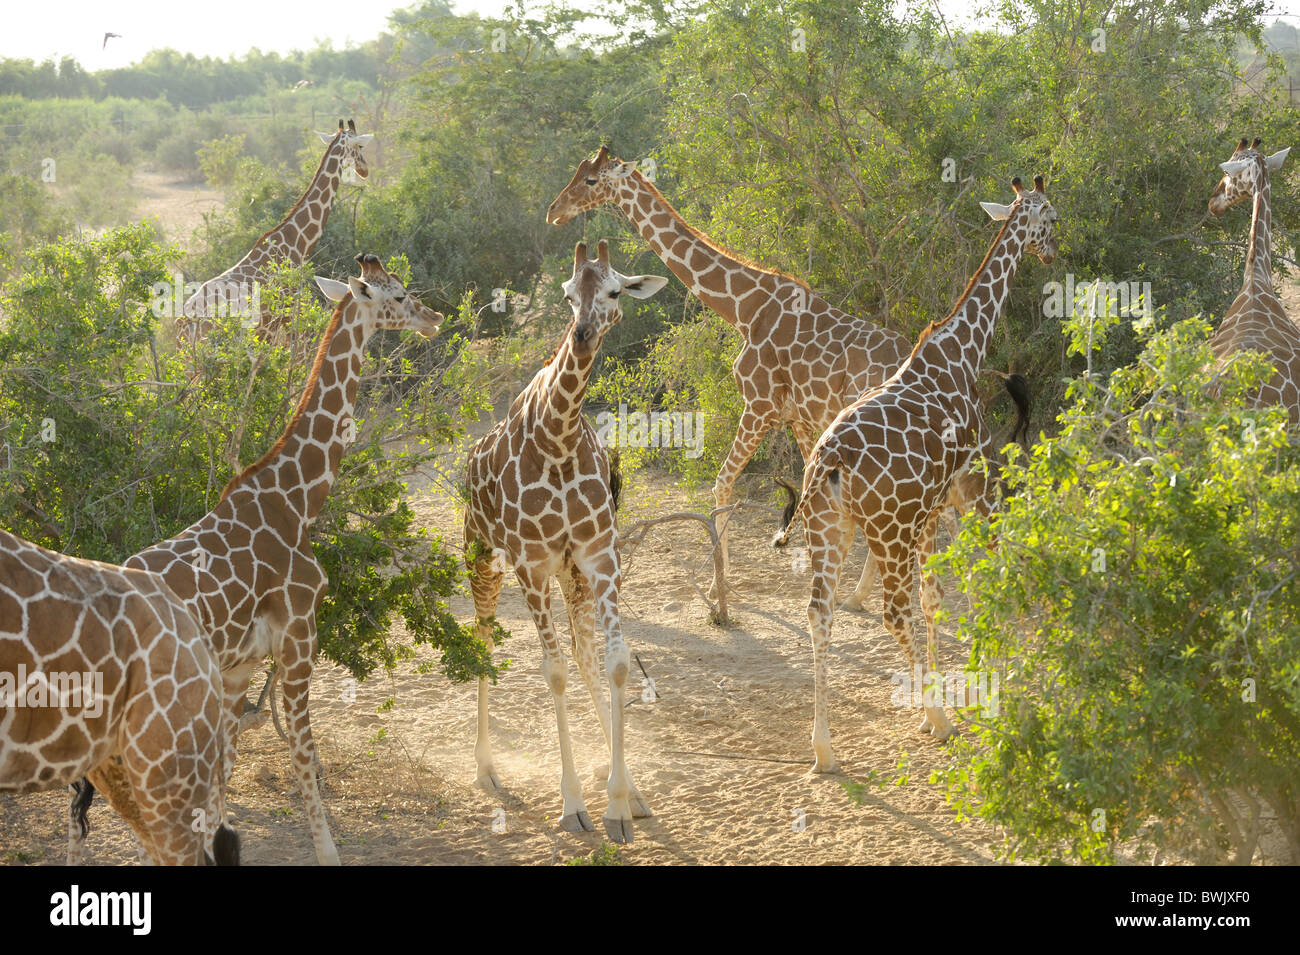 Several giraffes (Giraffa camelopardalis) among Acacia thorn trees on Sir Bani Yas Island, UAE Stock Photo